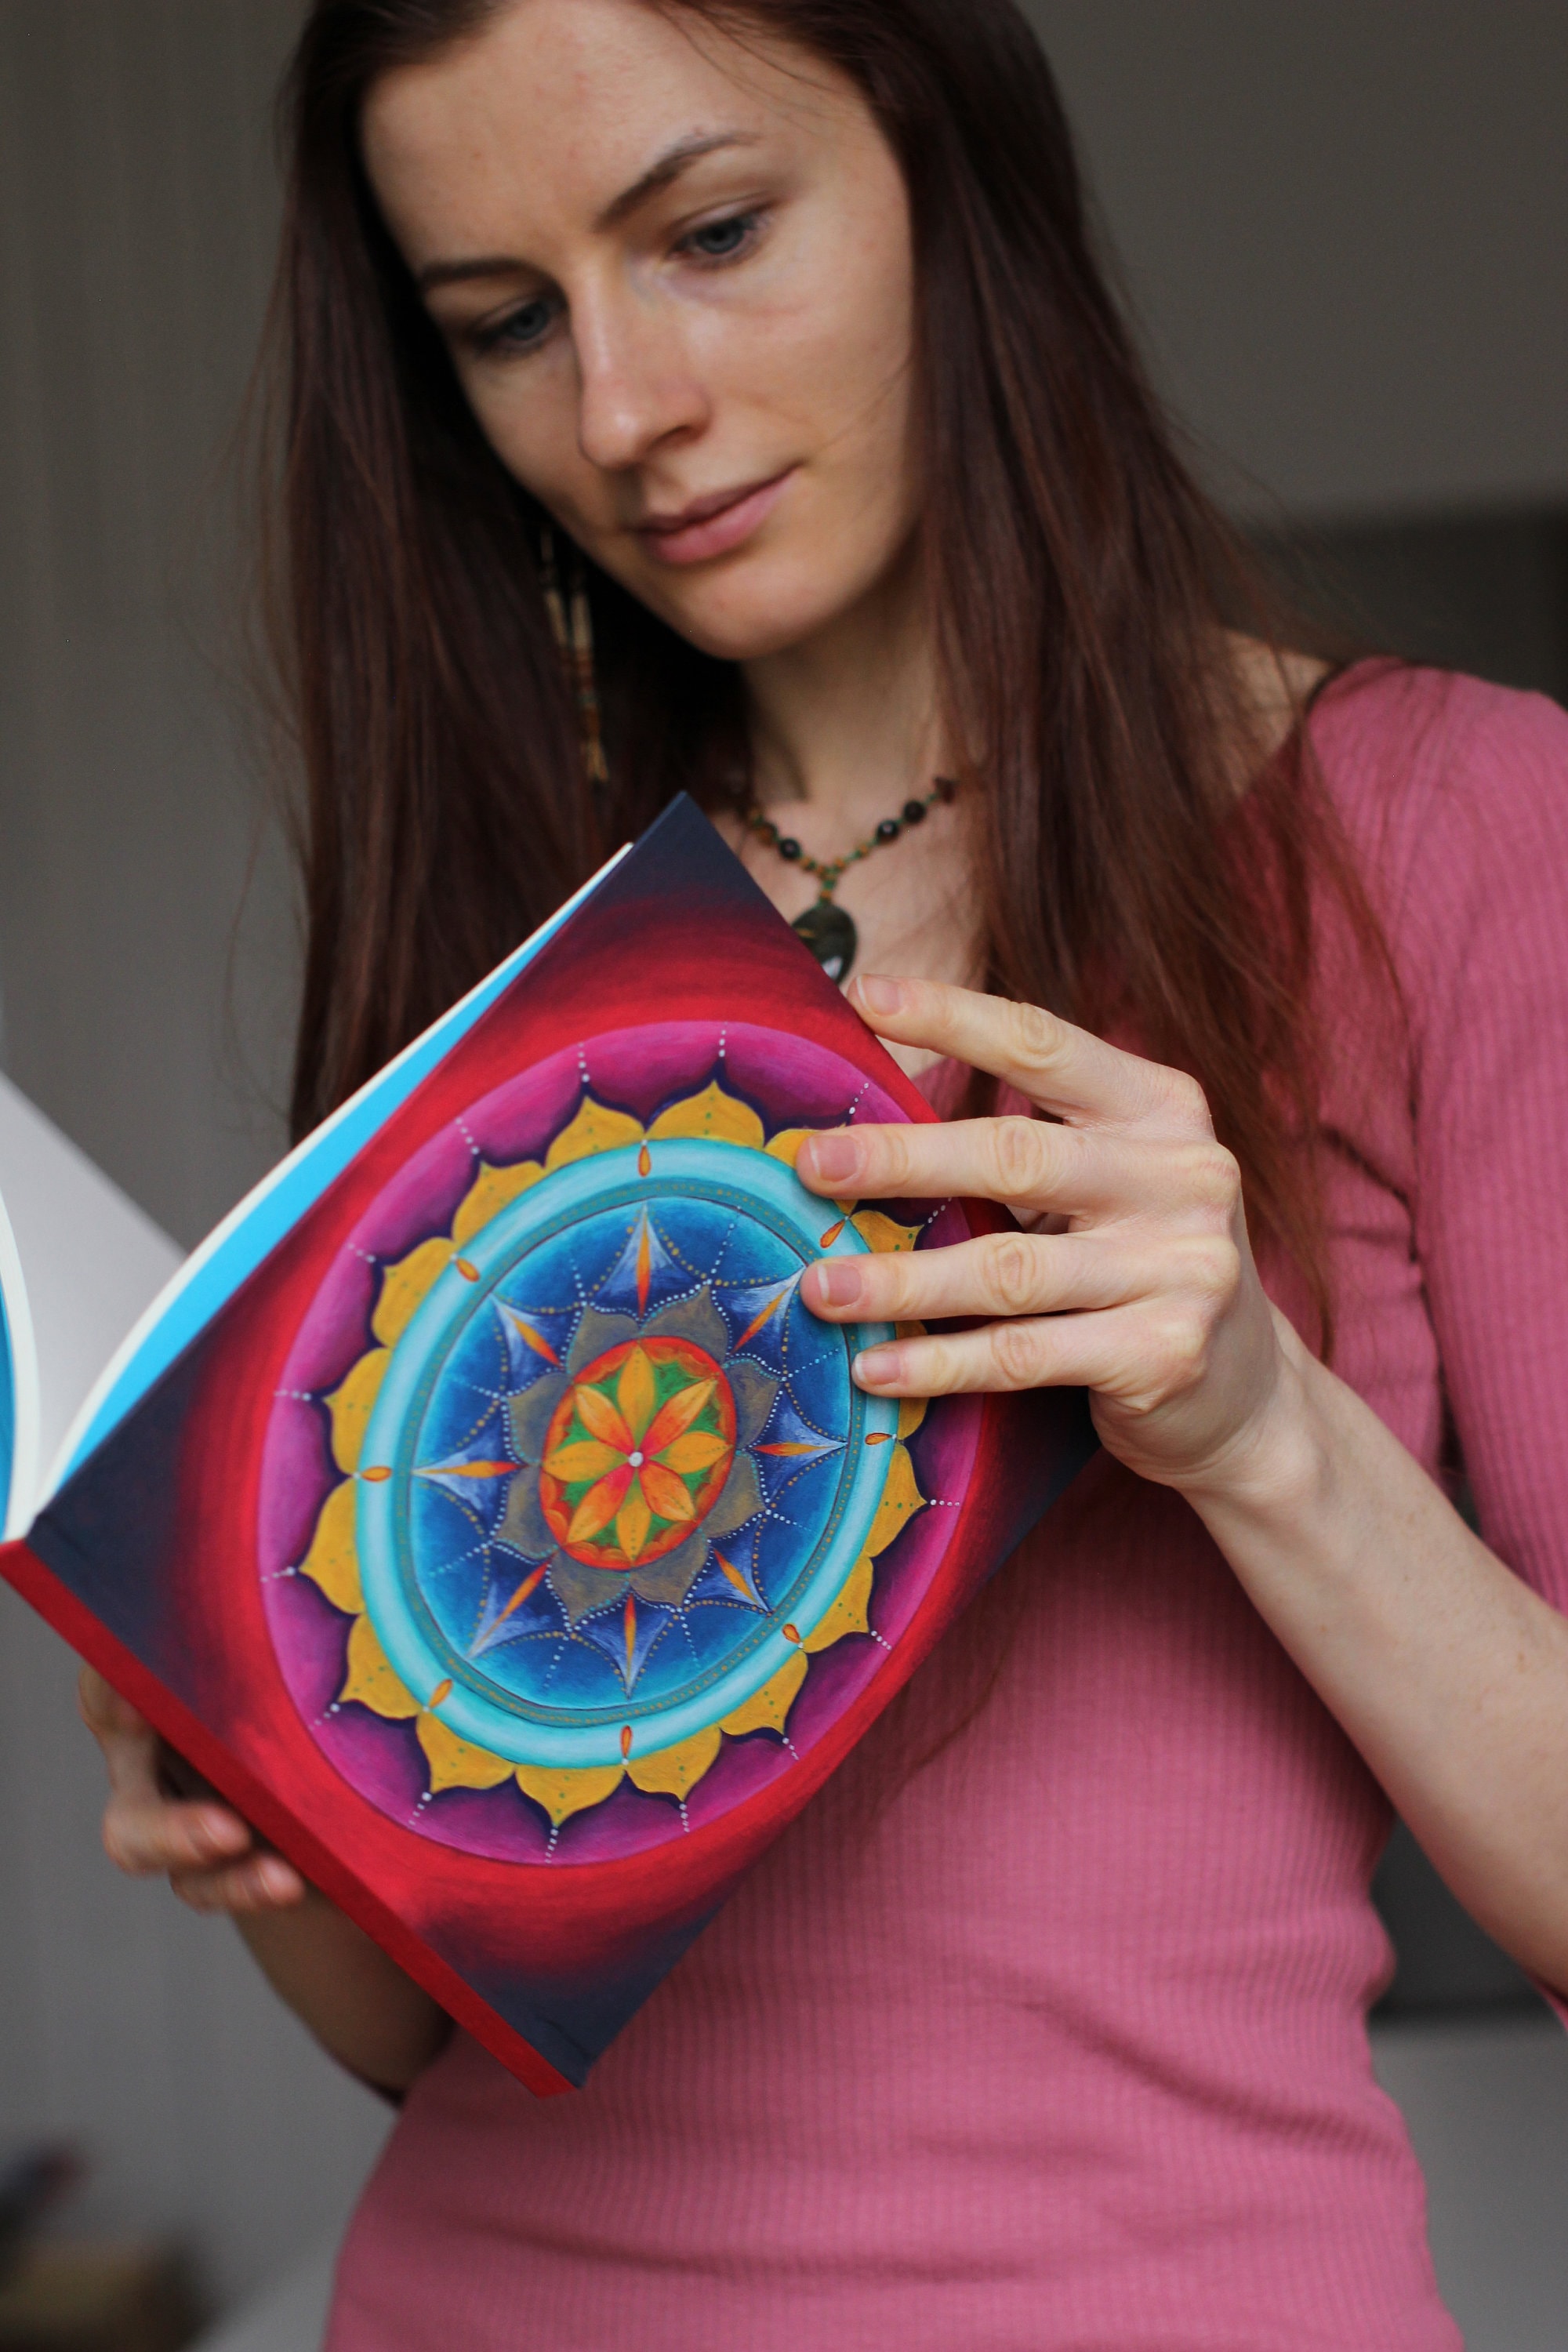 Mandala Sketchbook And Coloring Book: Circular Templates for Drawing &  Coloring Your Own Mandalas - Meditation Drawing Book For Adults, Teens,  Girls